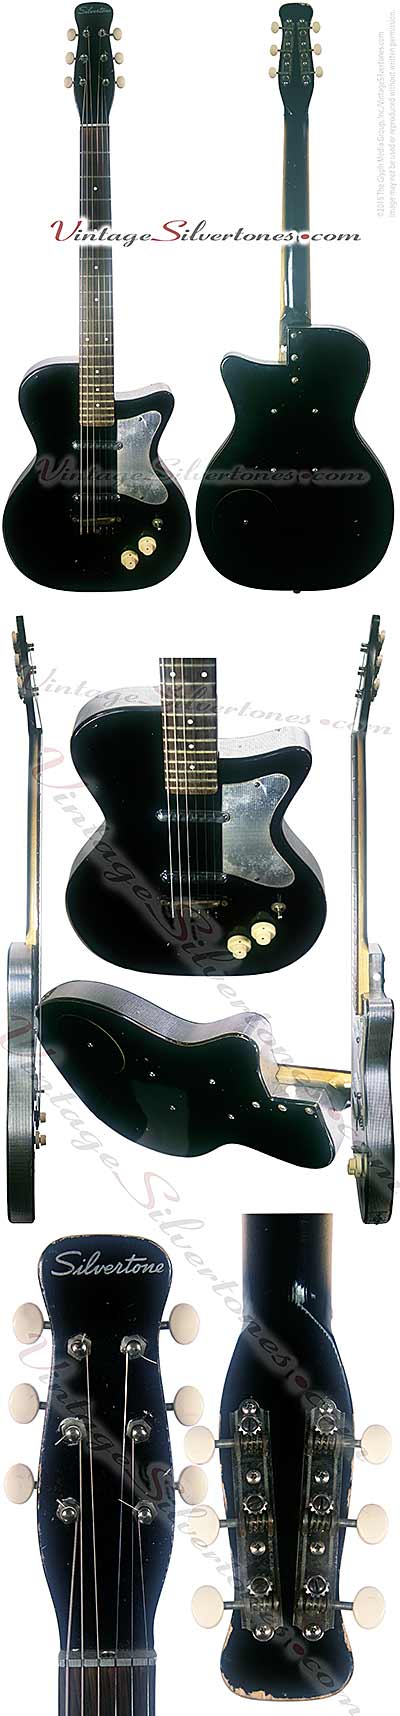 Silvertone 1319 made by Danelectro U2, two pickup, electric guitar, semi-hollow body, black body with silver vinyl binding, masonite body, lipstick pickup, made in 1955